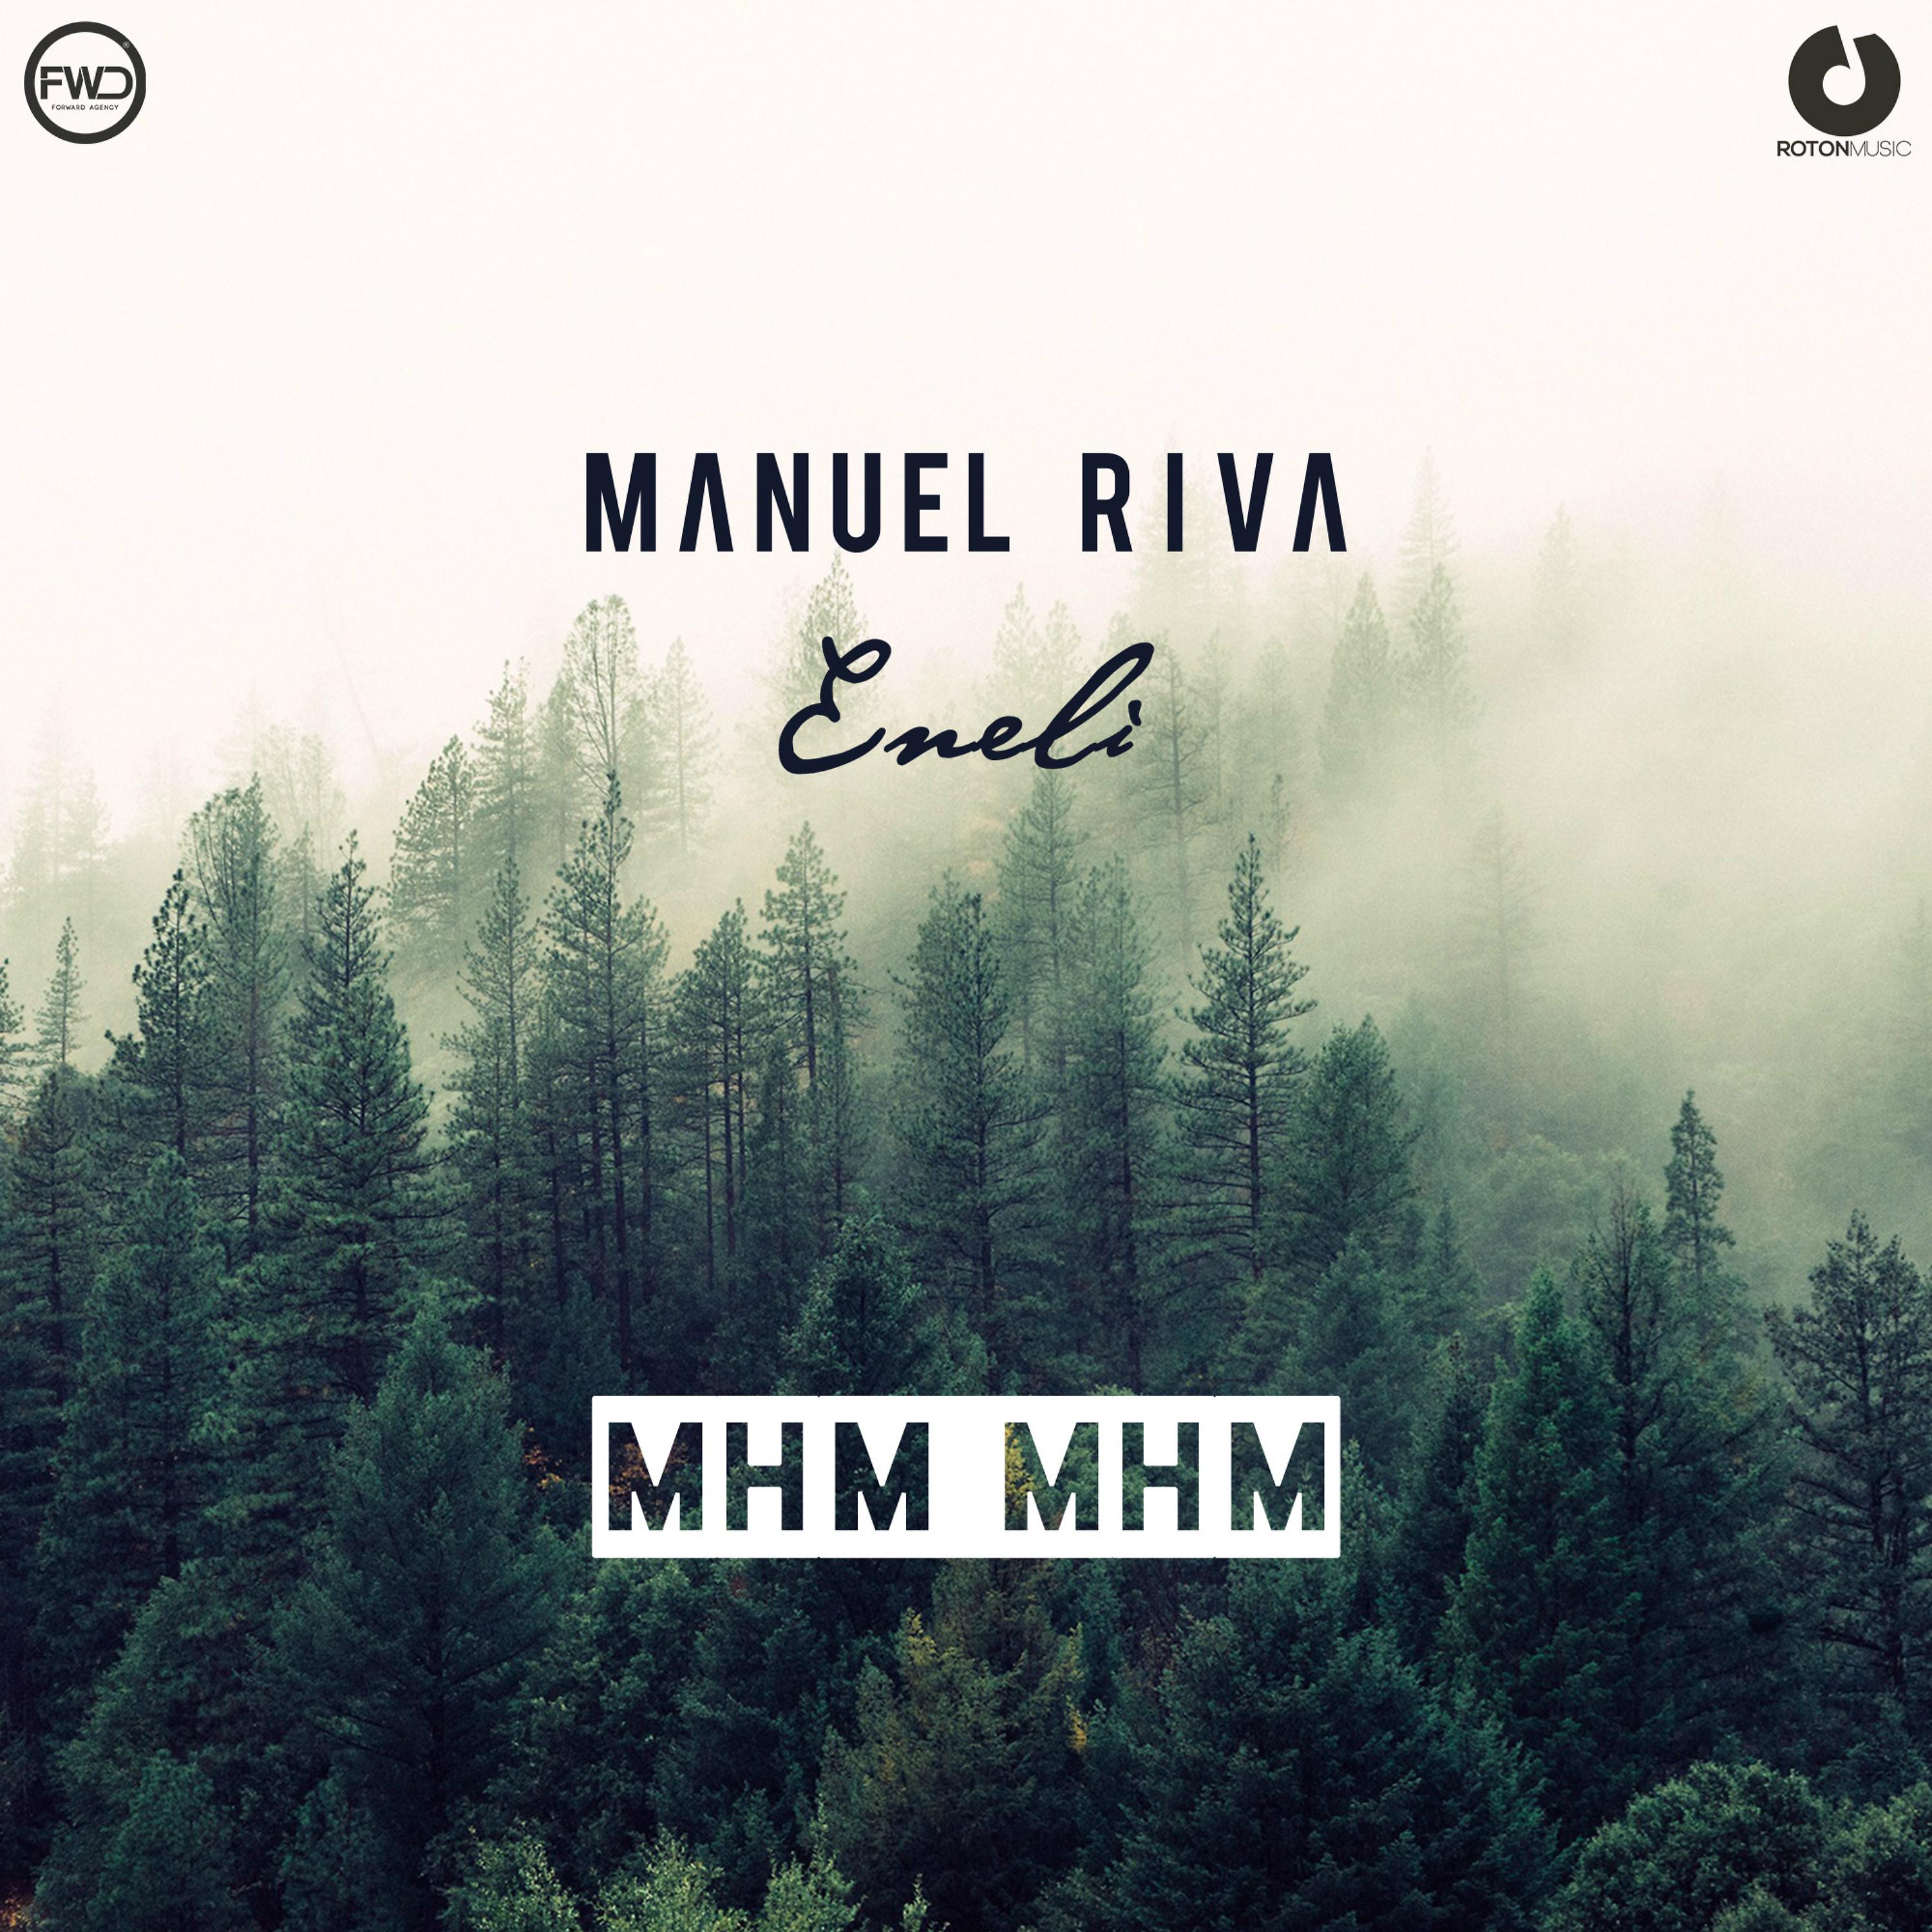 Manuel Riva, Eneli - Mhm Mhm (Extended Version)